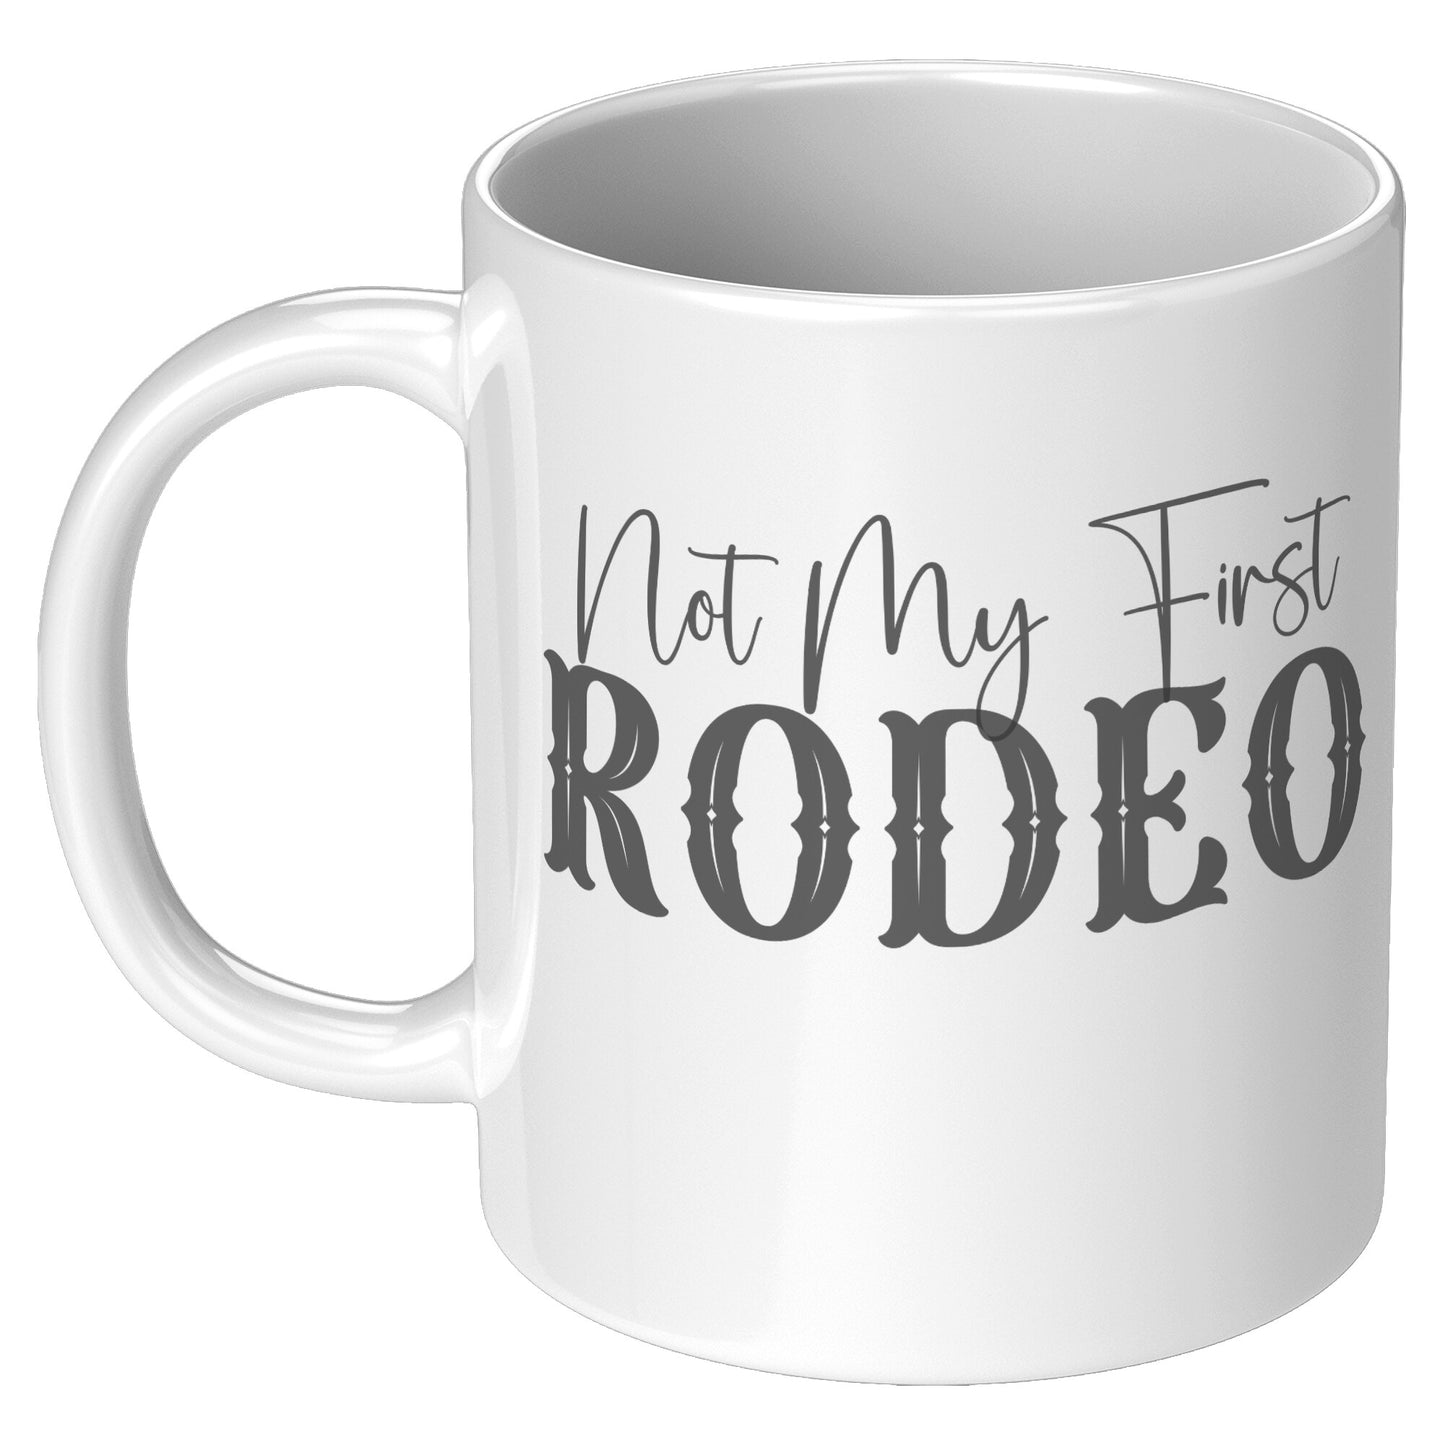 Not My First Rodeo Mug